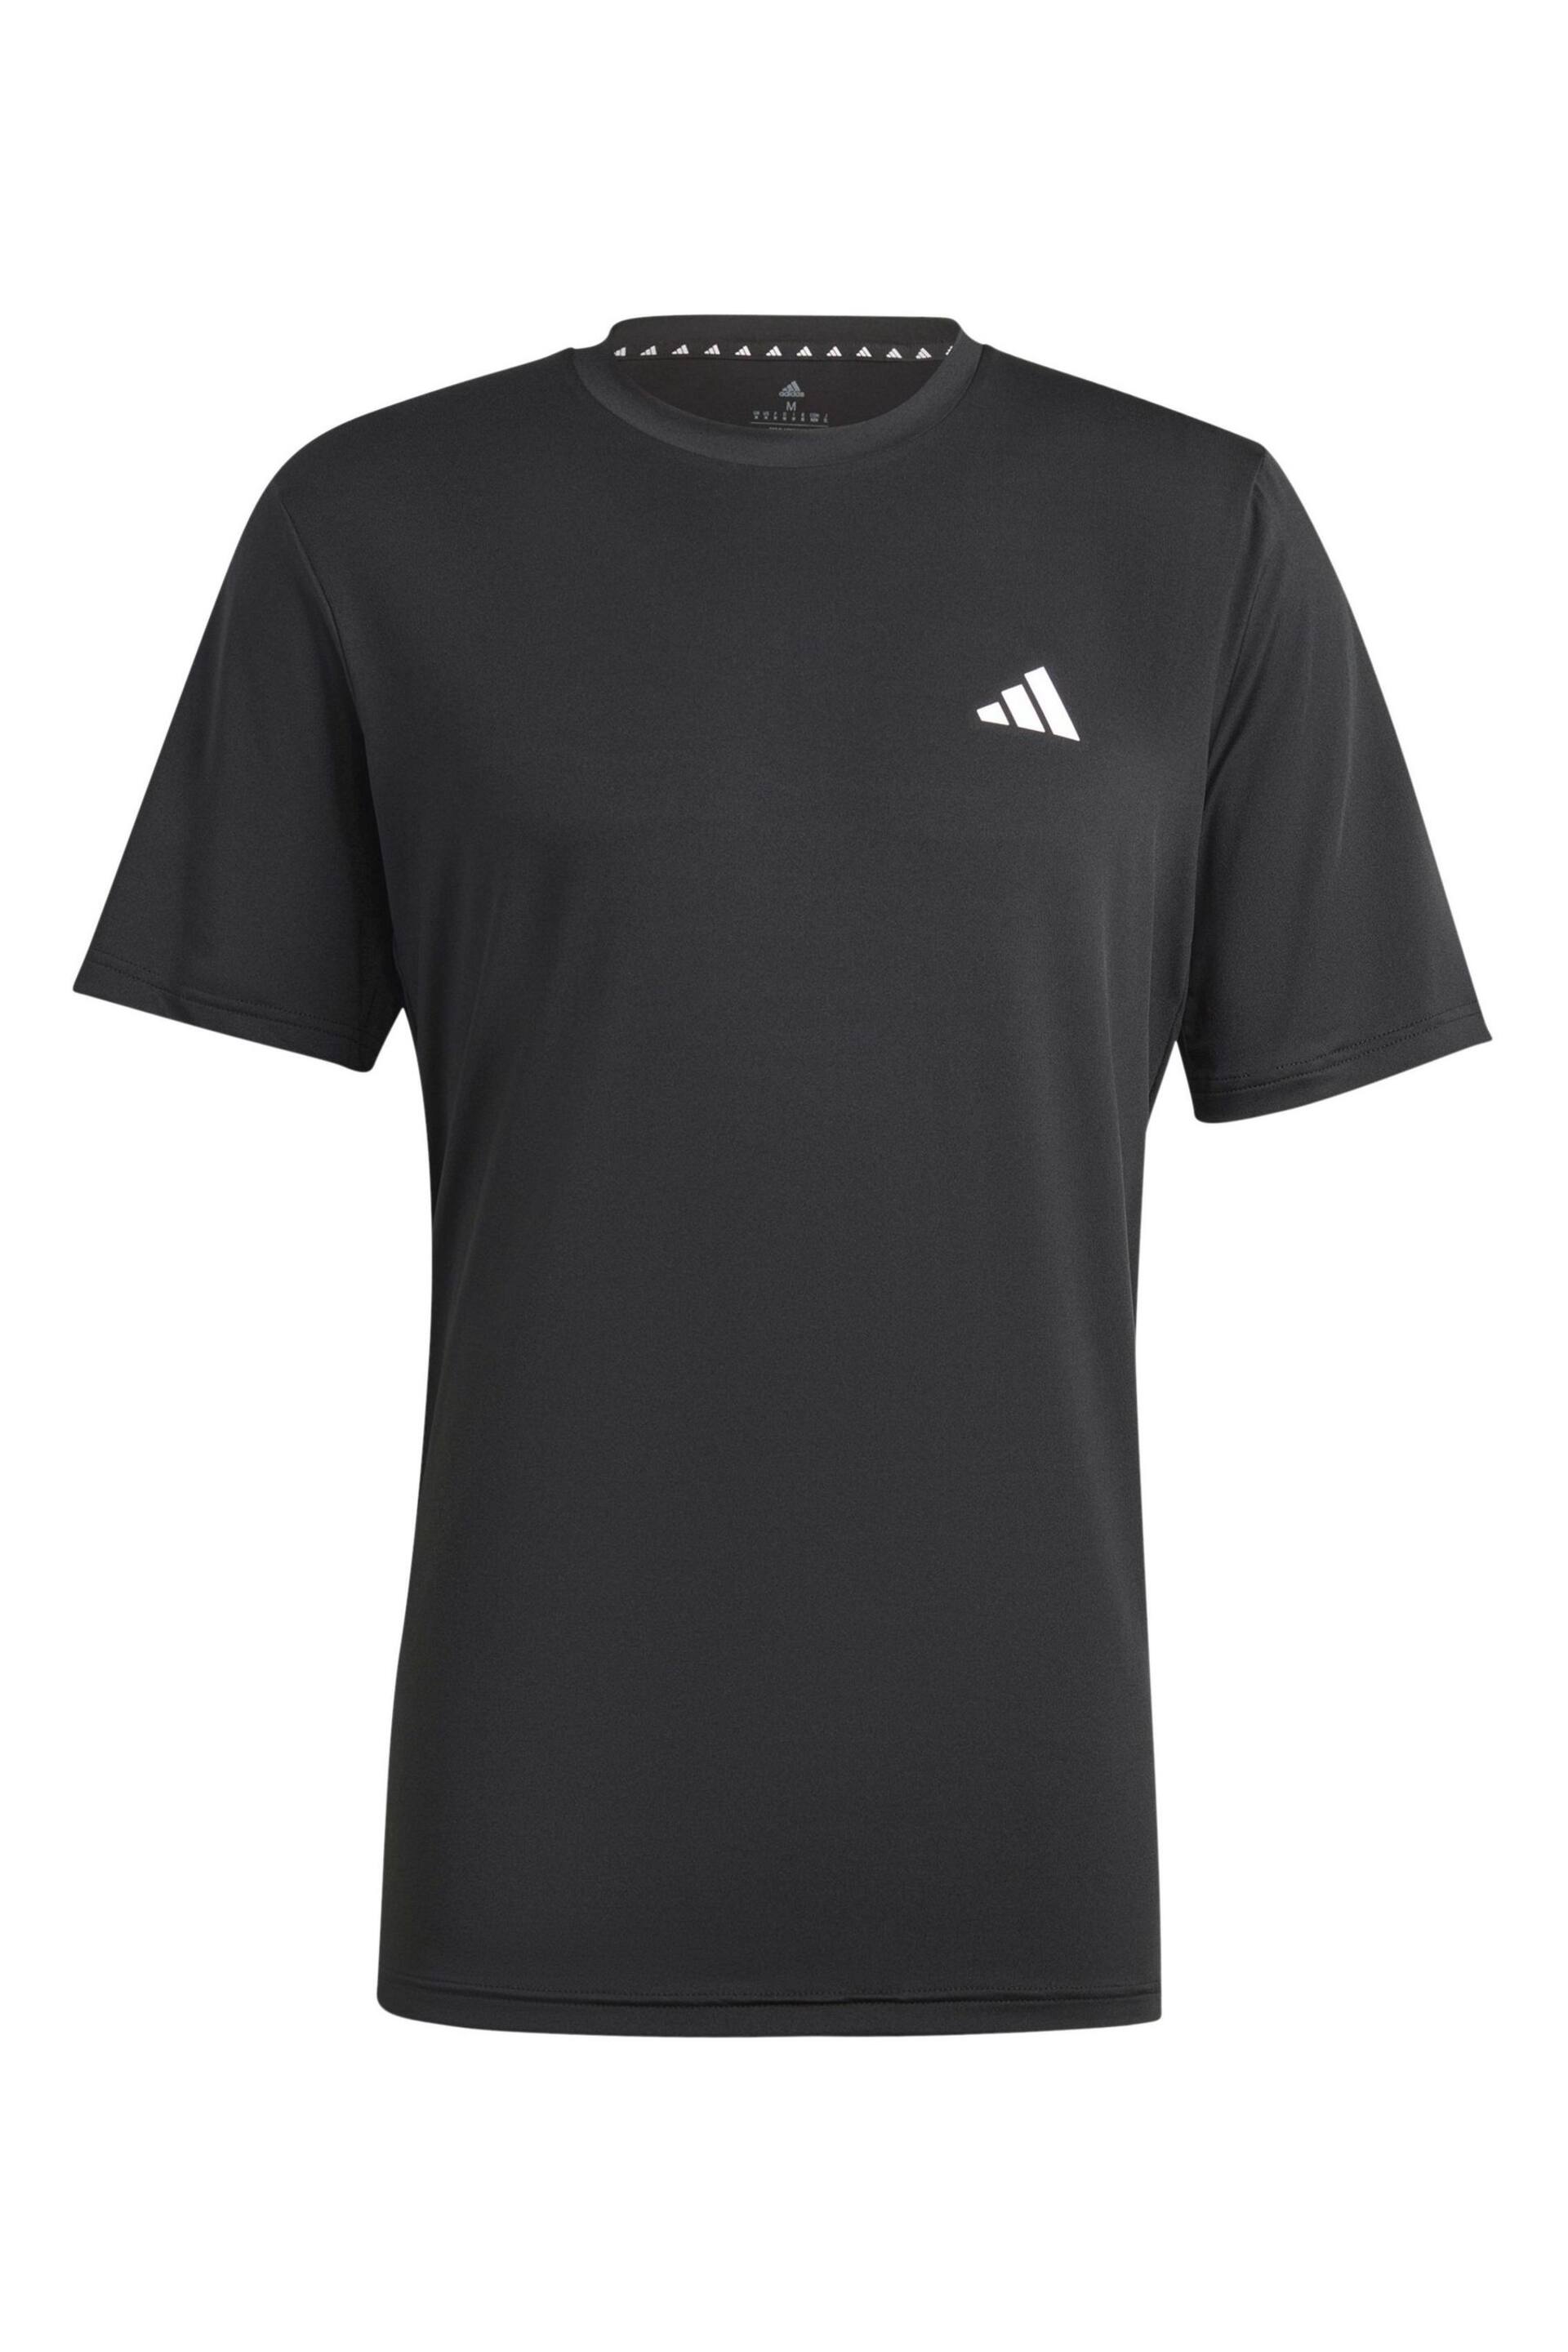 adidas Black Train Essentials Stretch Training T-Shirt - Image 4 of 4